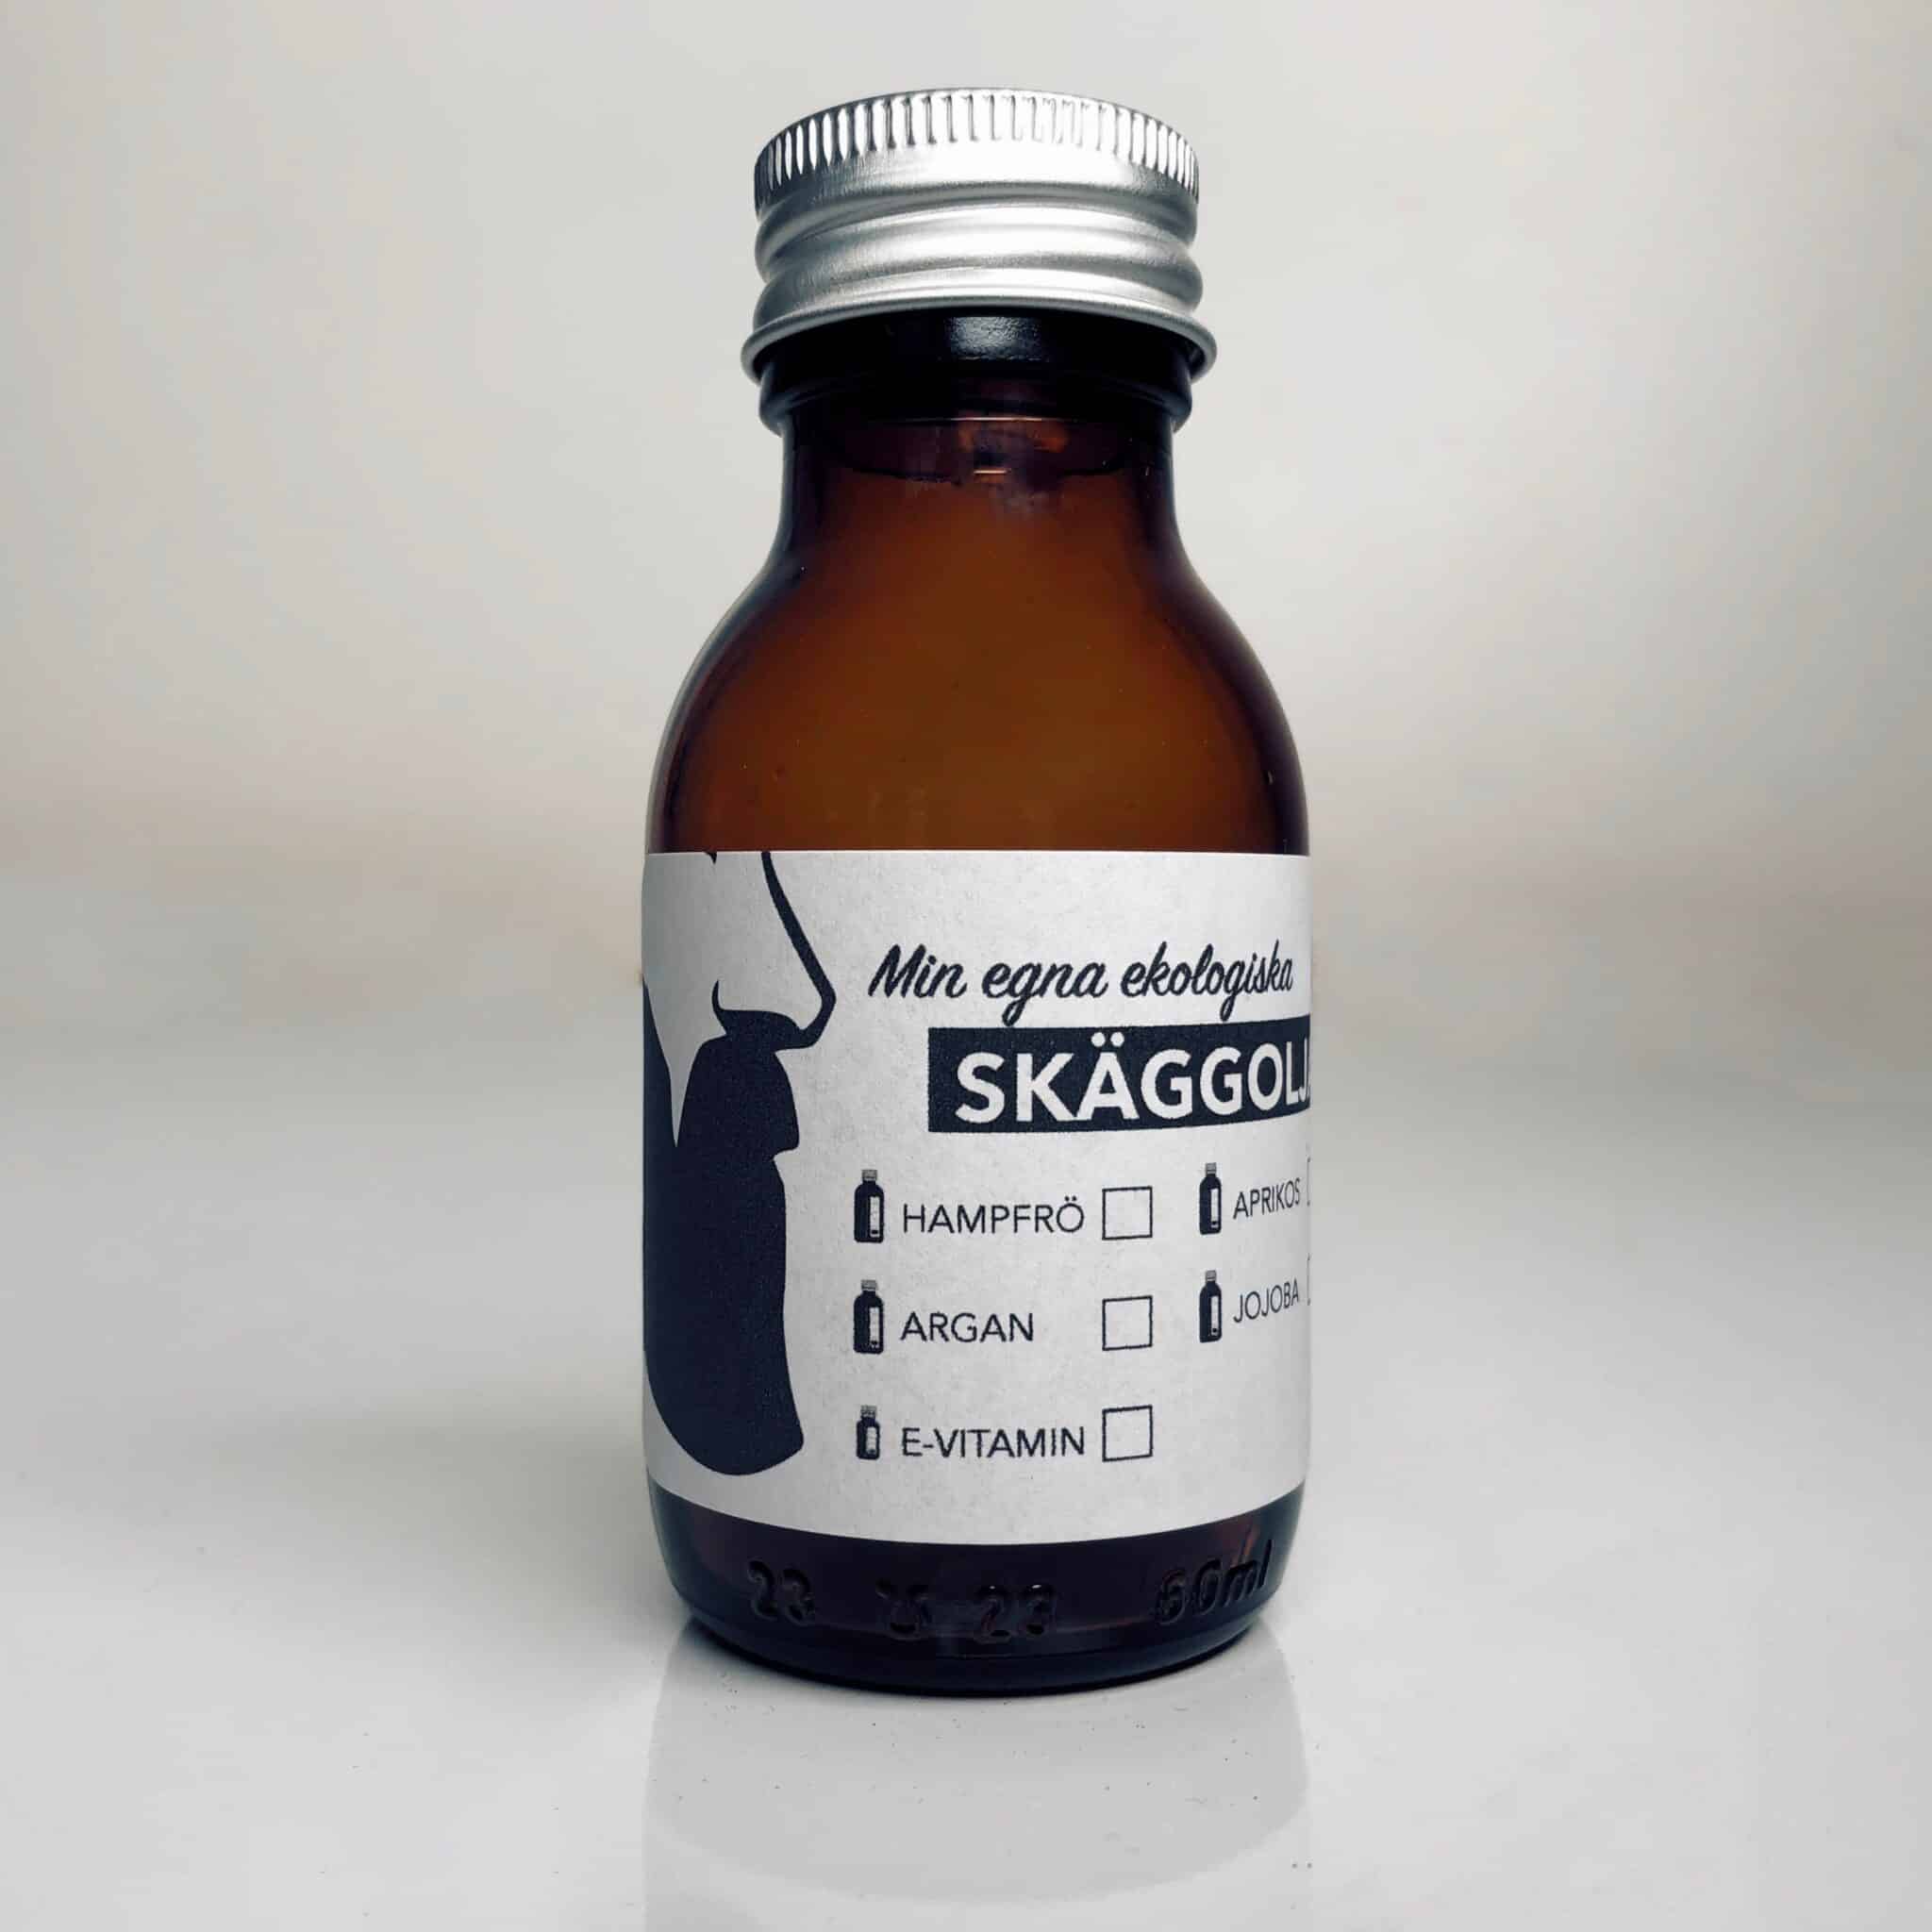 Kemikalieklok - 3 recept på ekologisk skäggolja